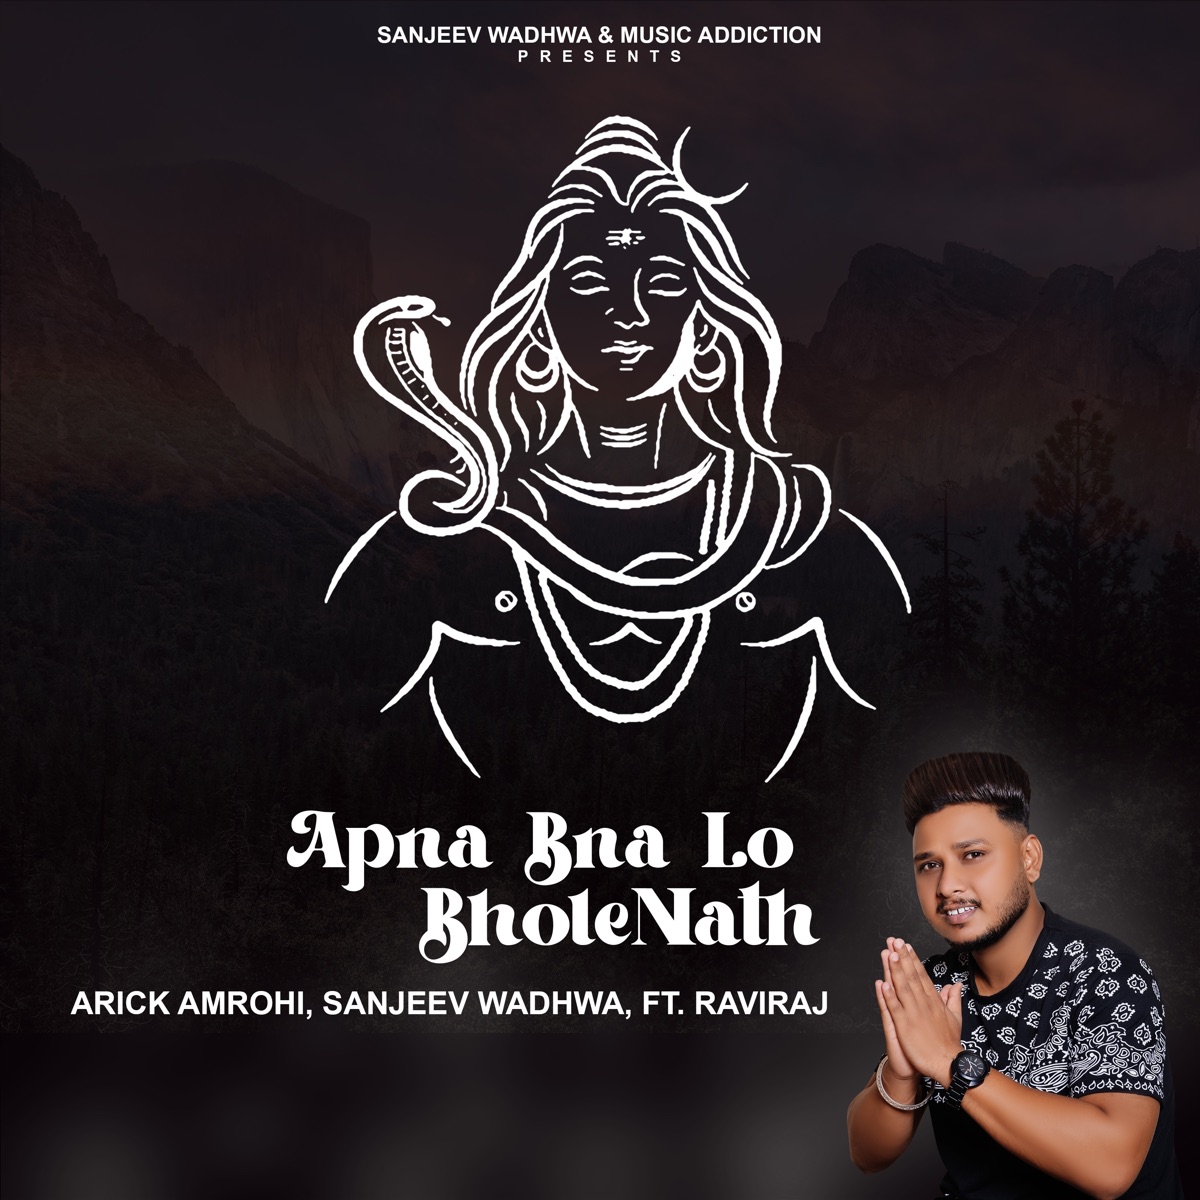 Bhole ka bhakt  song and lyrics by RJ 47  Spotify